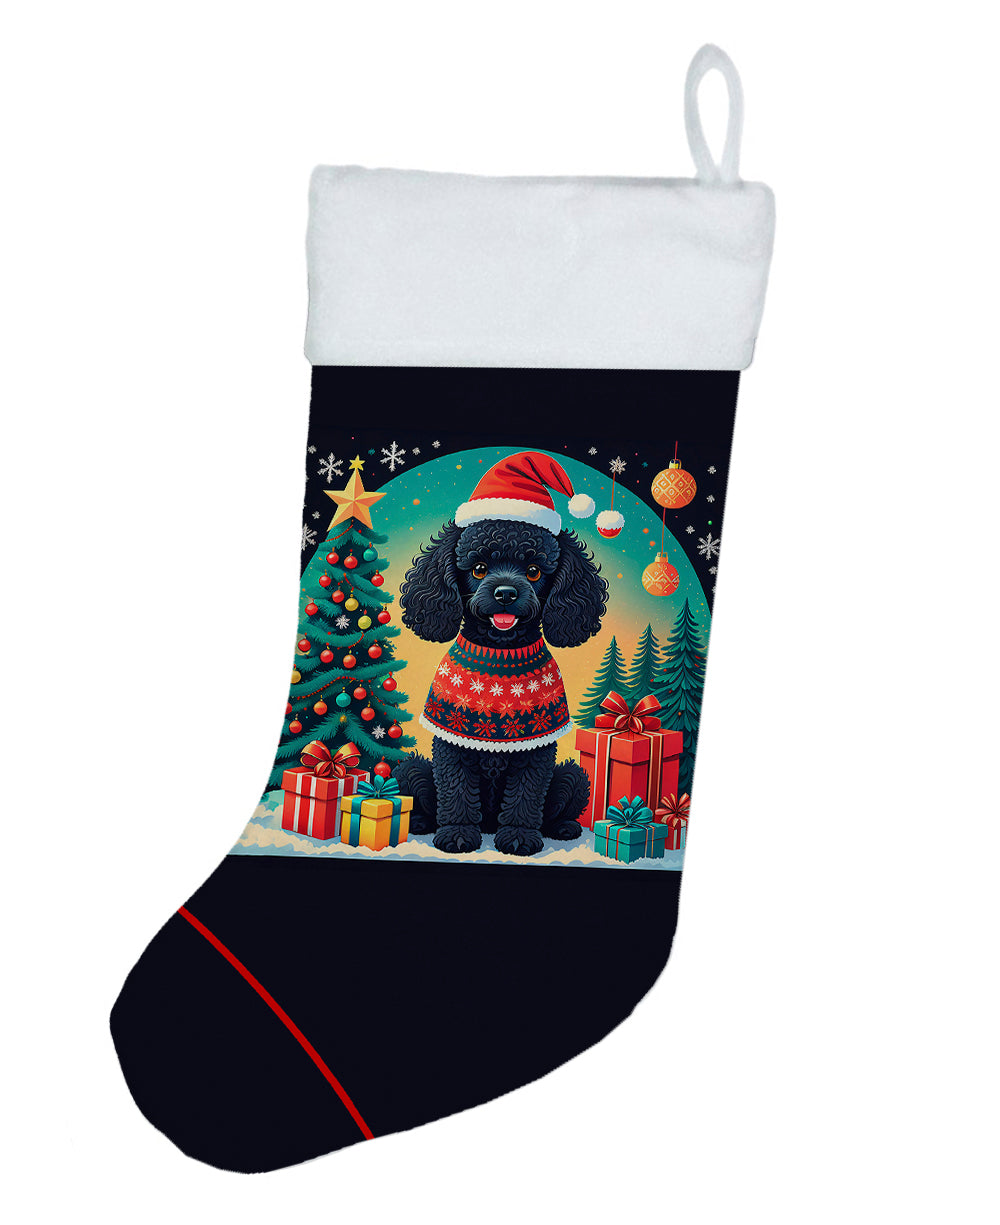 Buy this Black Toy Poodle Christmas Christmas Stocking